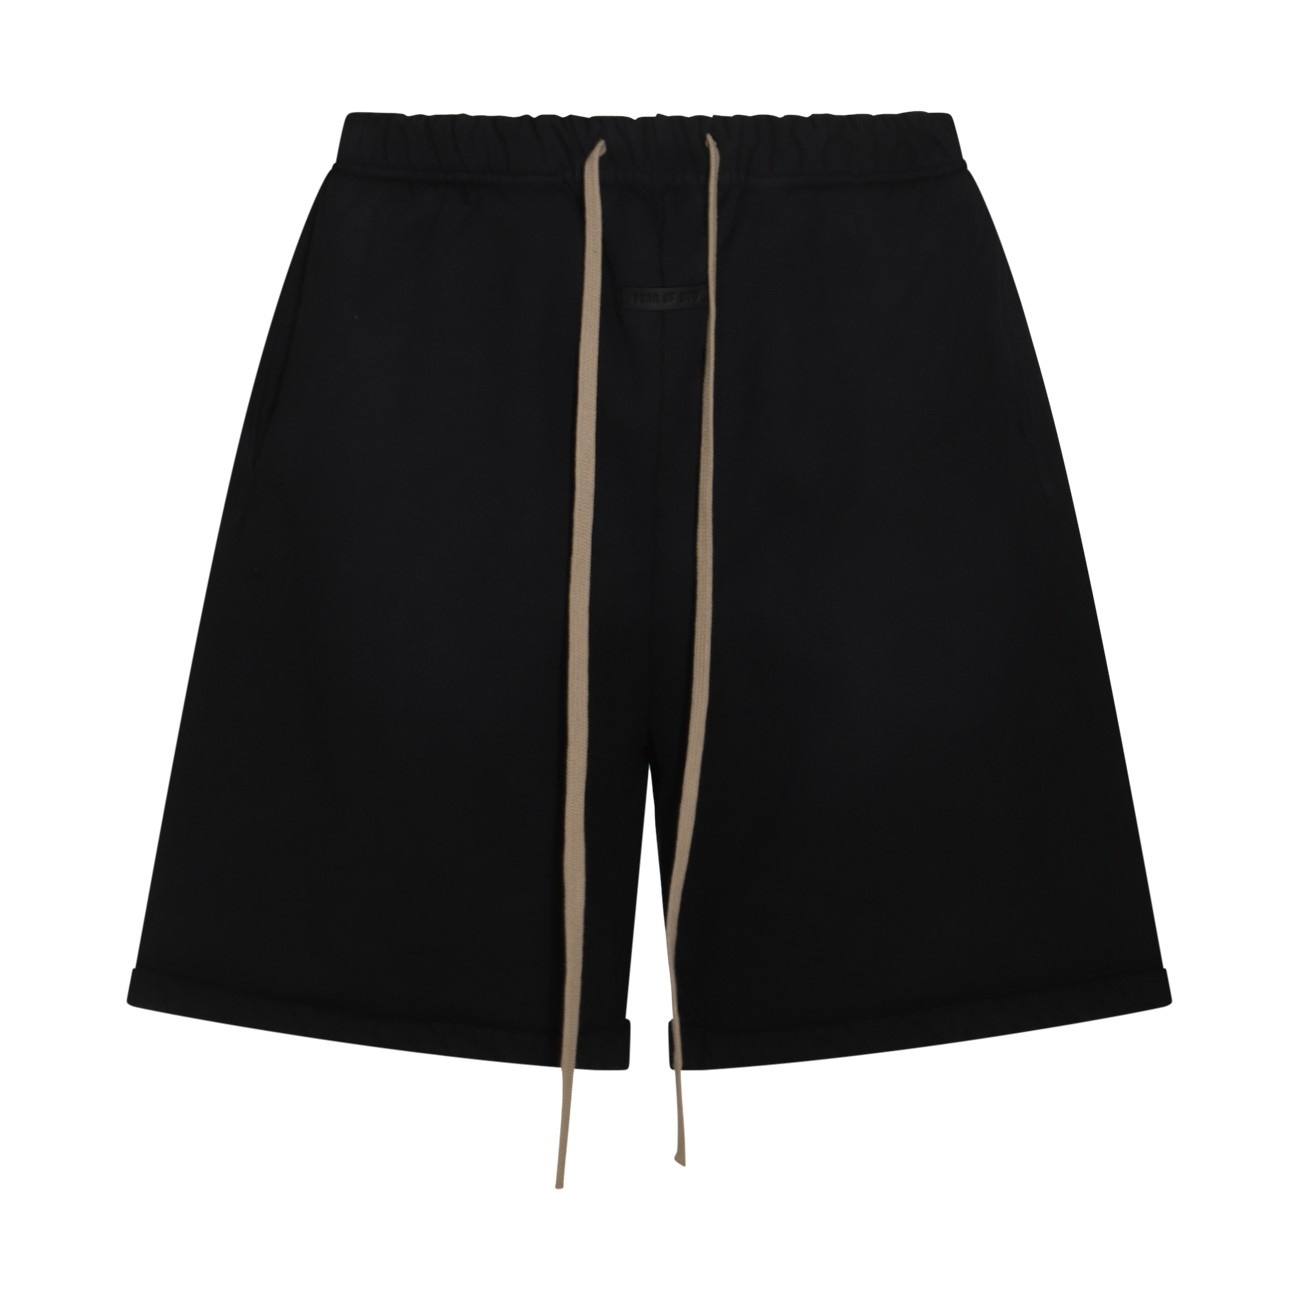 black cotton shorts - 1